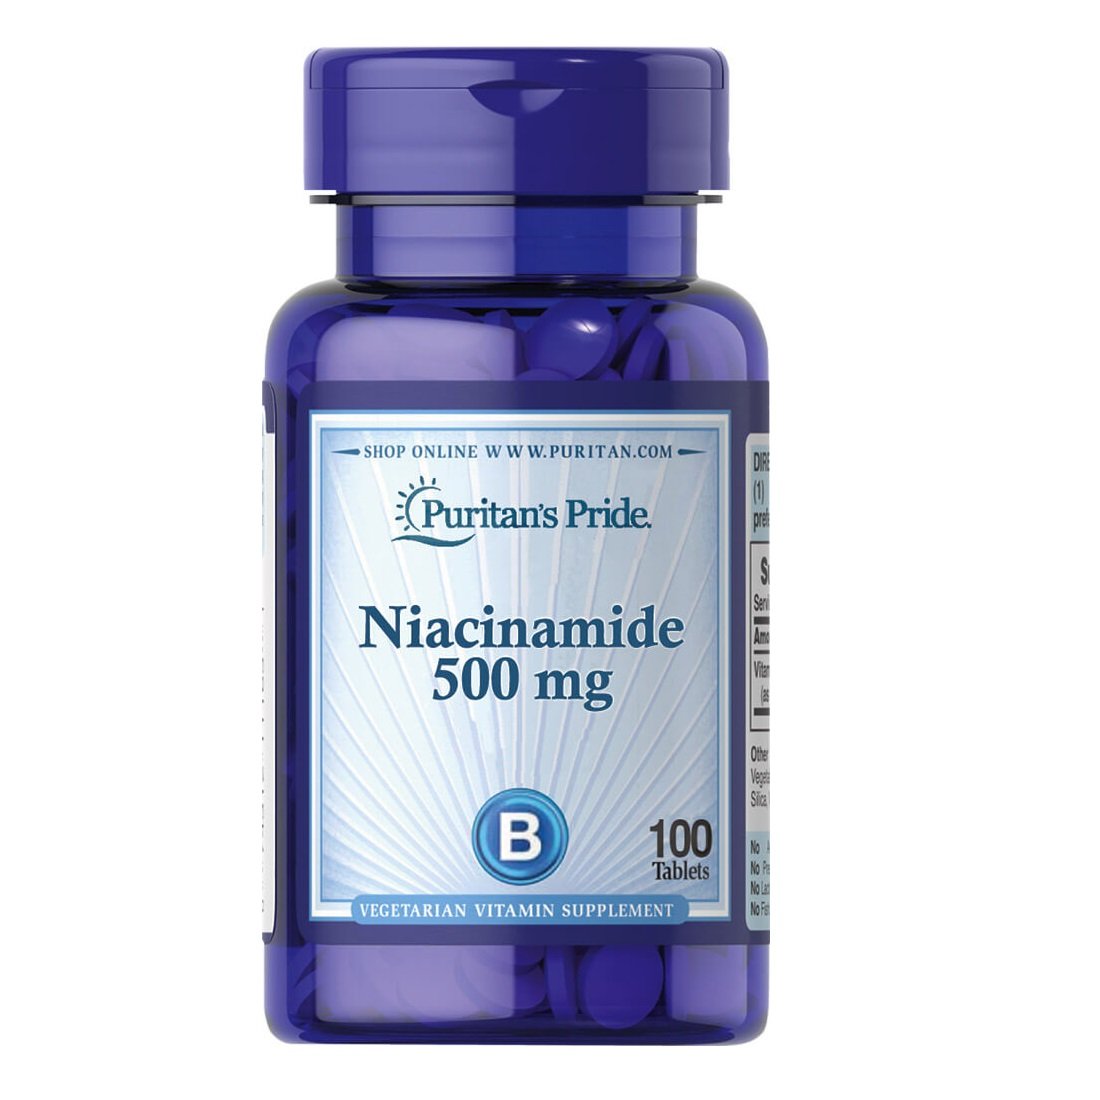 Витамины и минералы Puritan's Pride Niacinamide 500 mg, 100 таблеток,  ml, Puritan's Pride. Vitaminas y minerales. General Health Immunity enhancement 